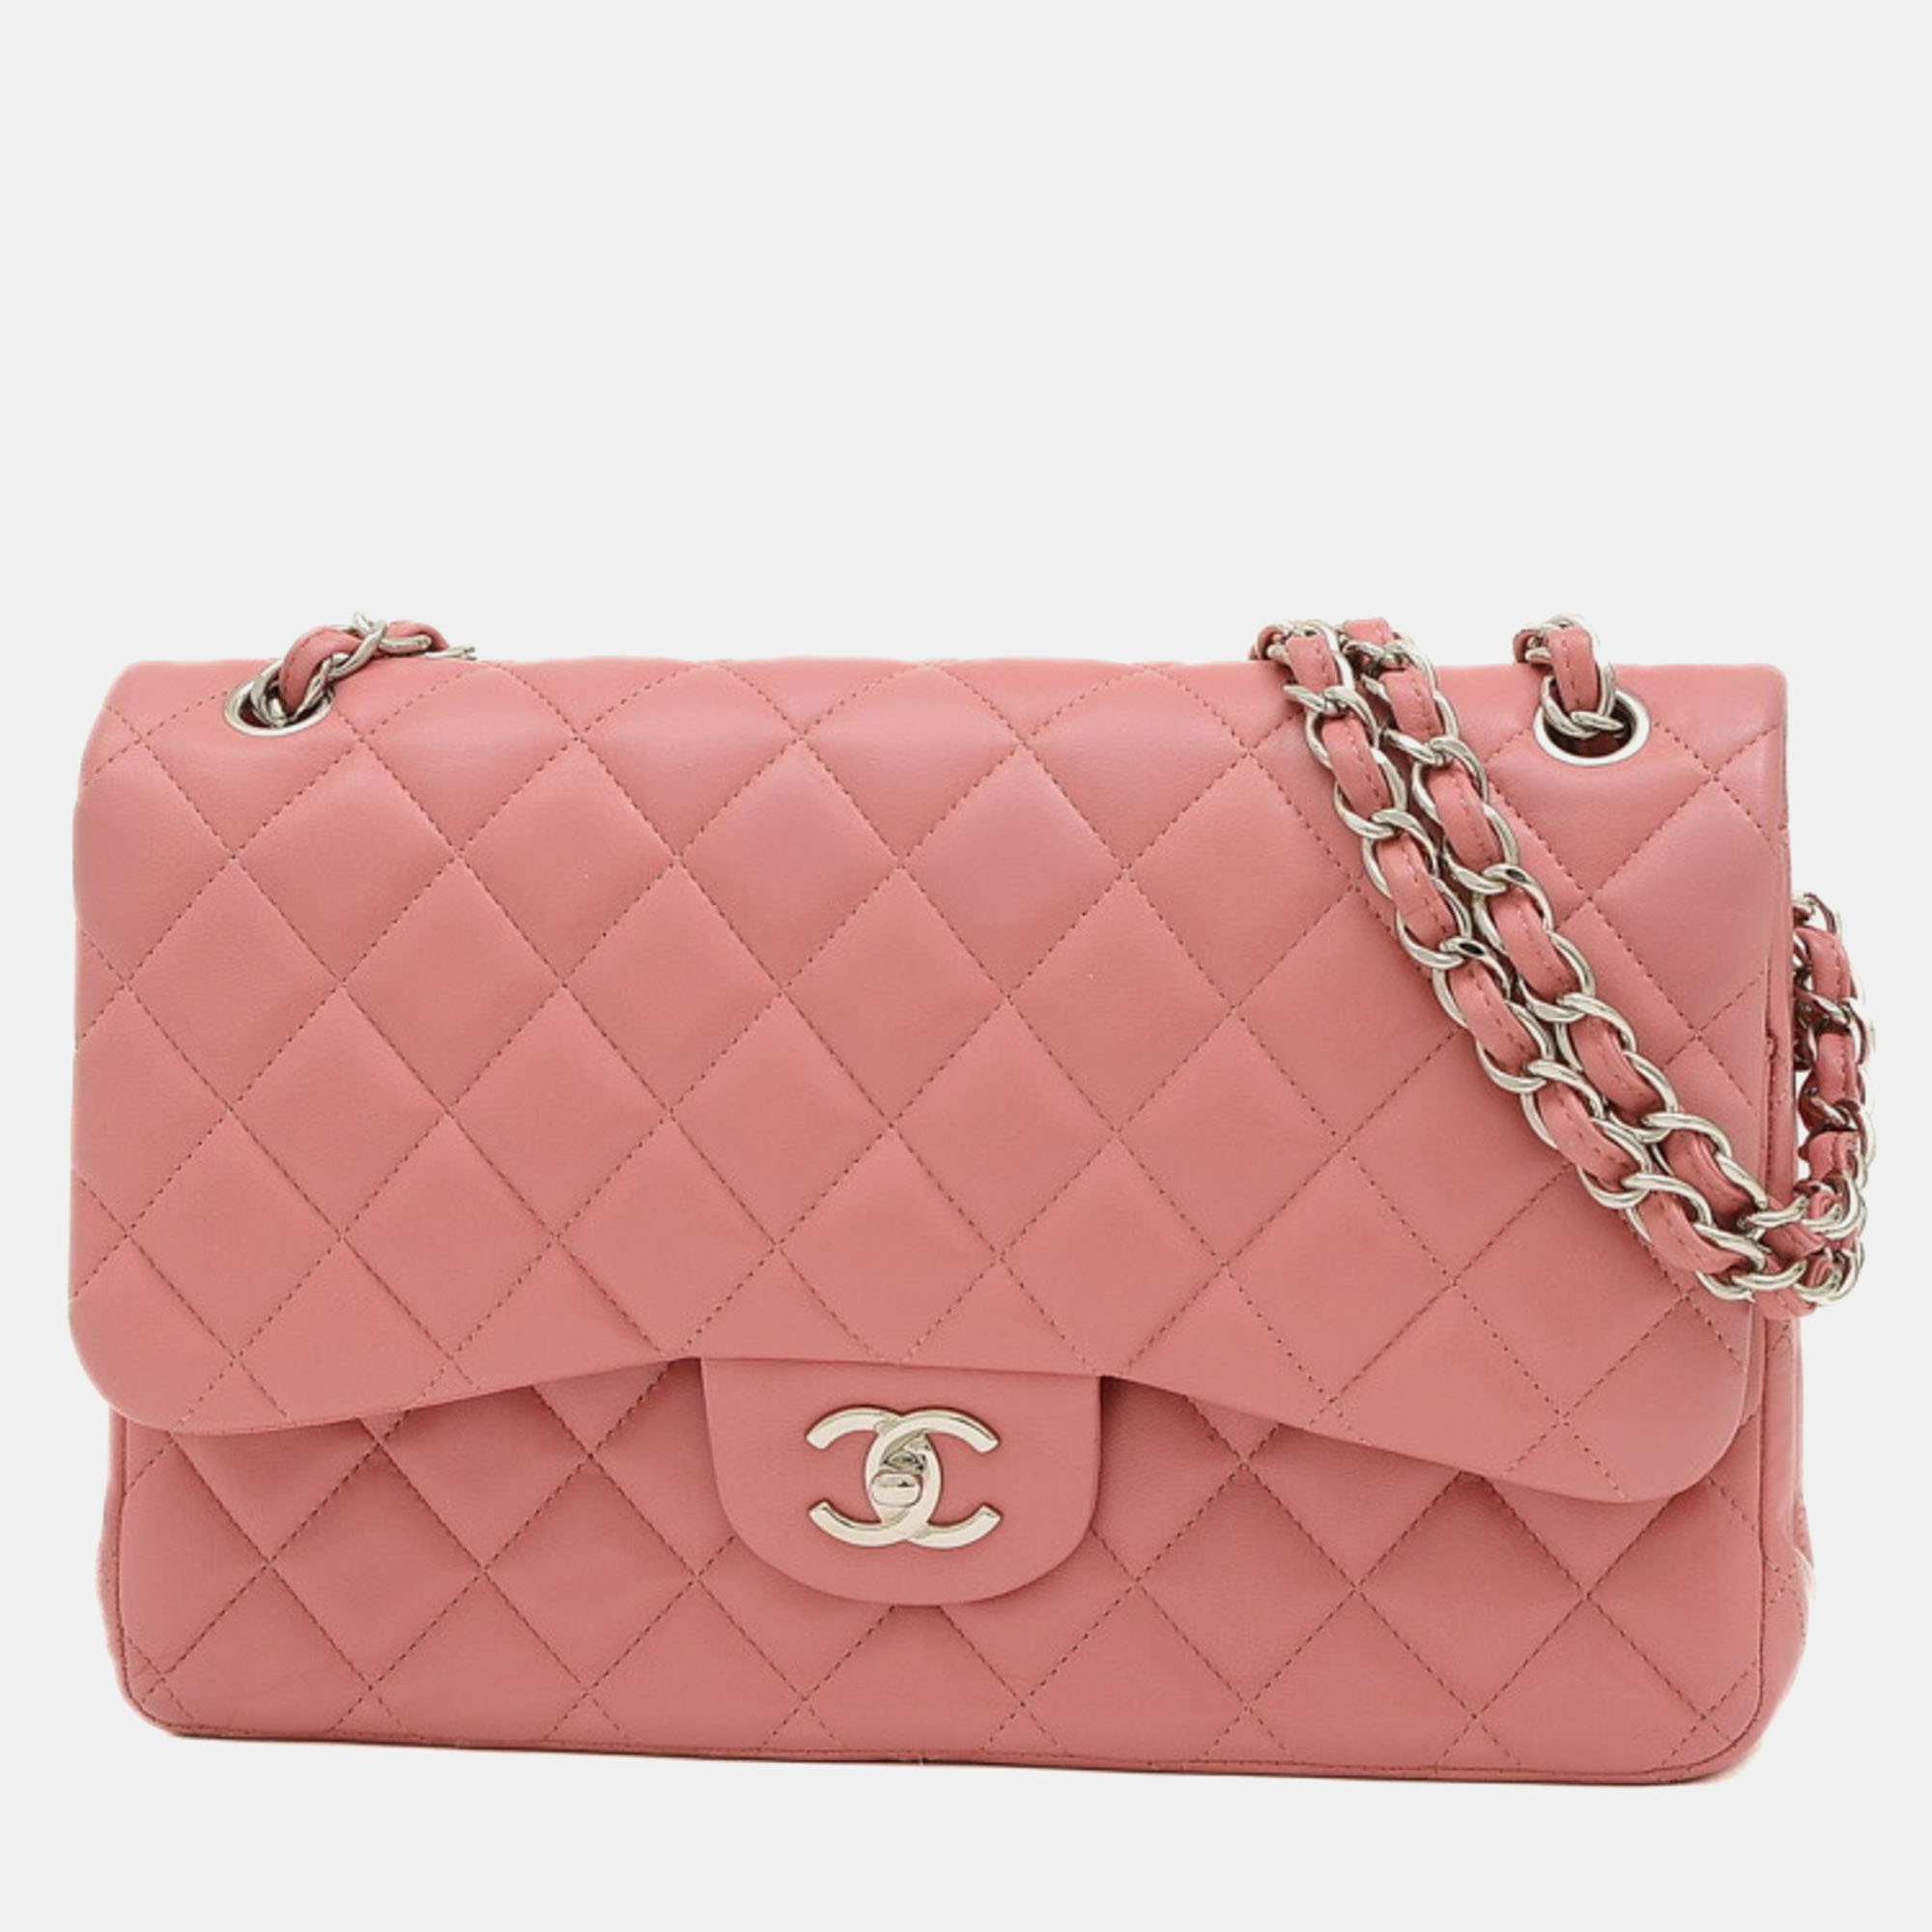 Chanel pink leather jumbo classic double flap bag